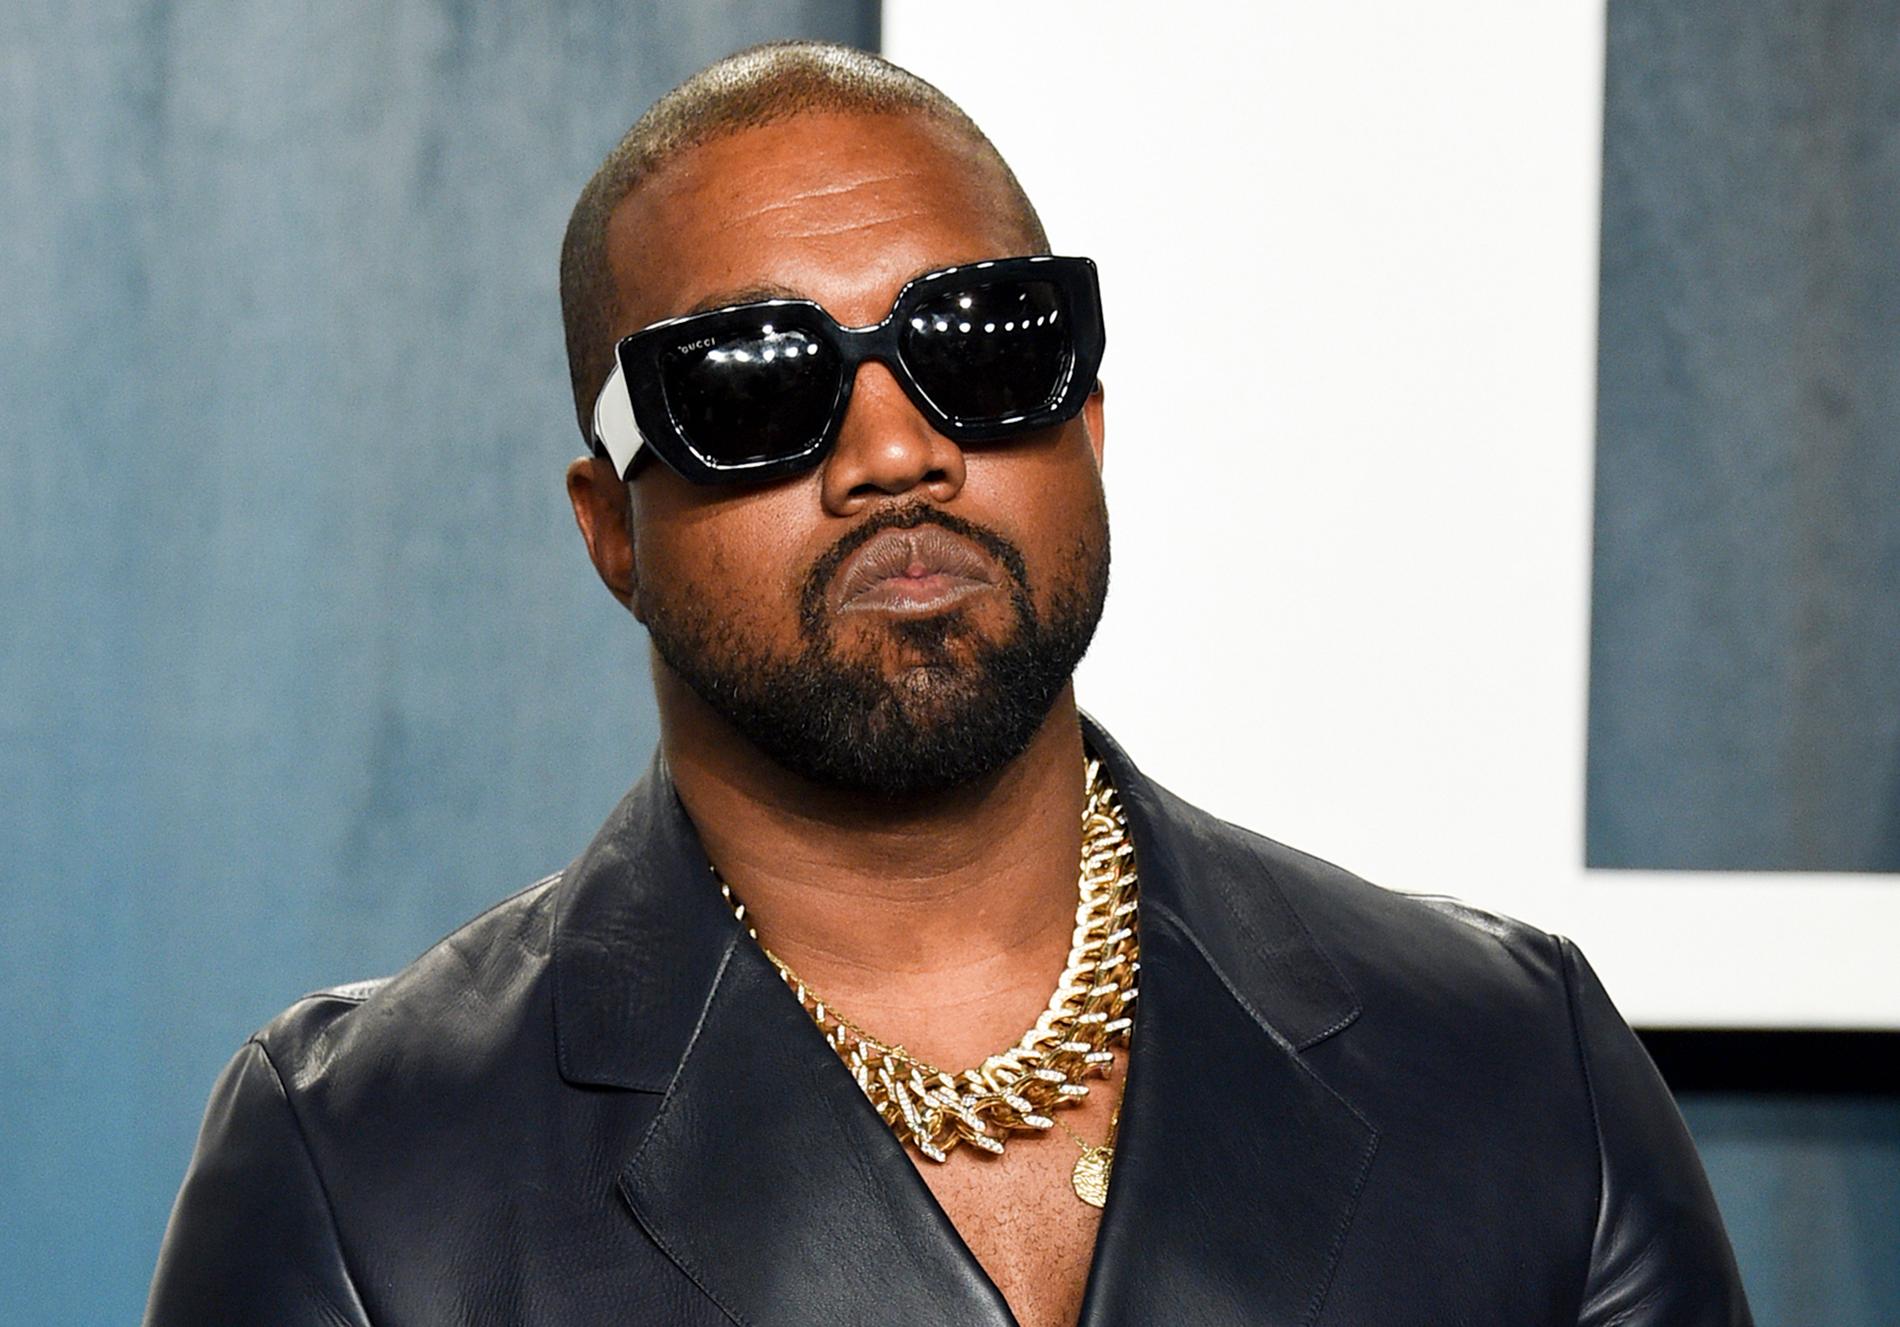 Kanye West, numera känd som Ye, köper kontroversiella appen Parler. Arkivbild.